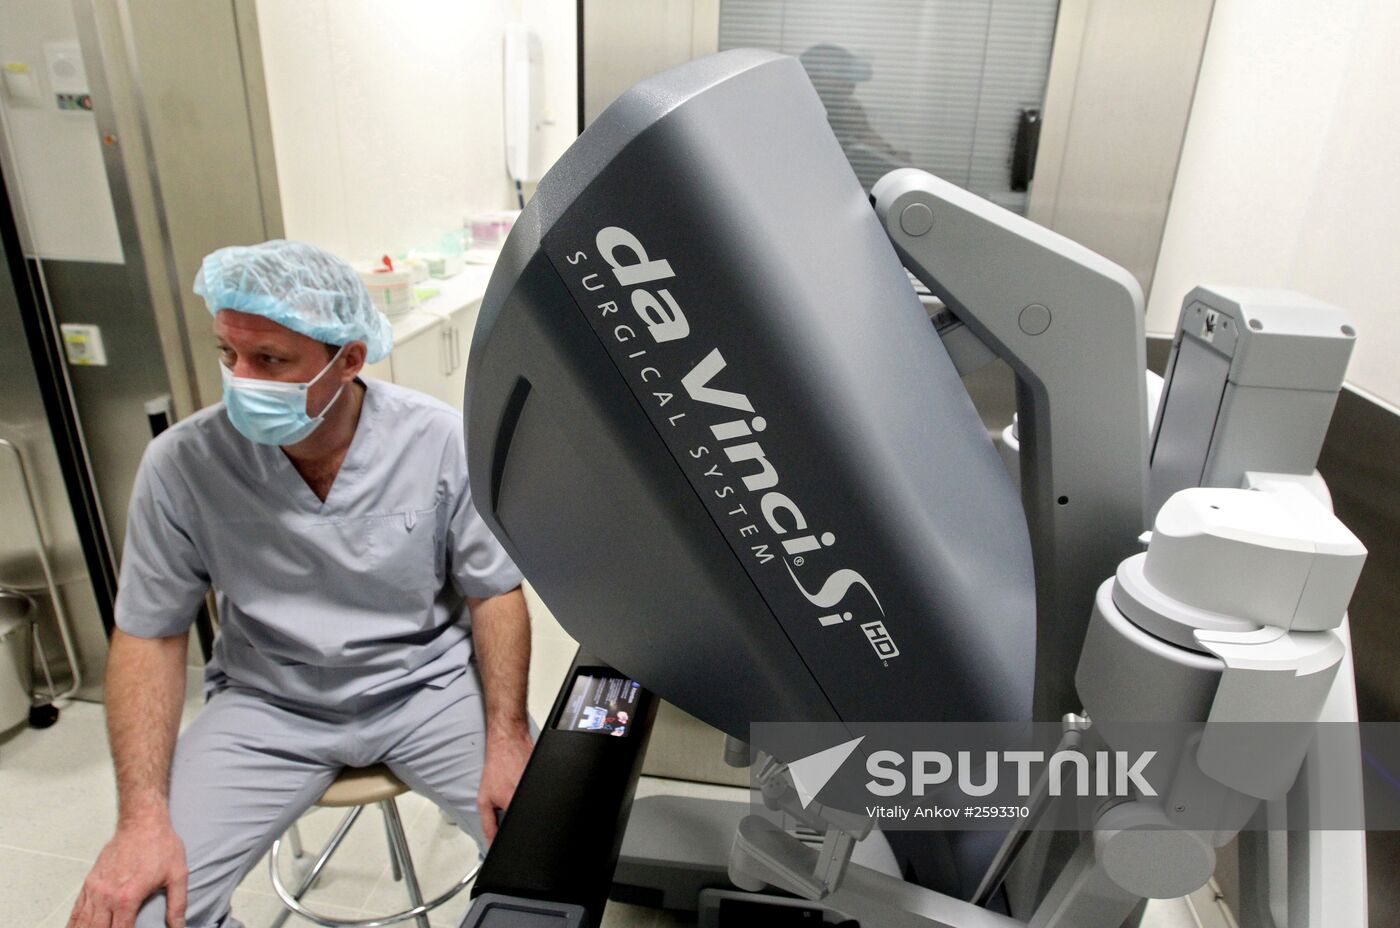 Da Vinci Surgical System treats patient in Vladivostok